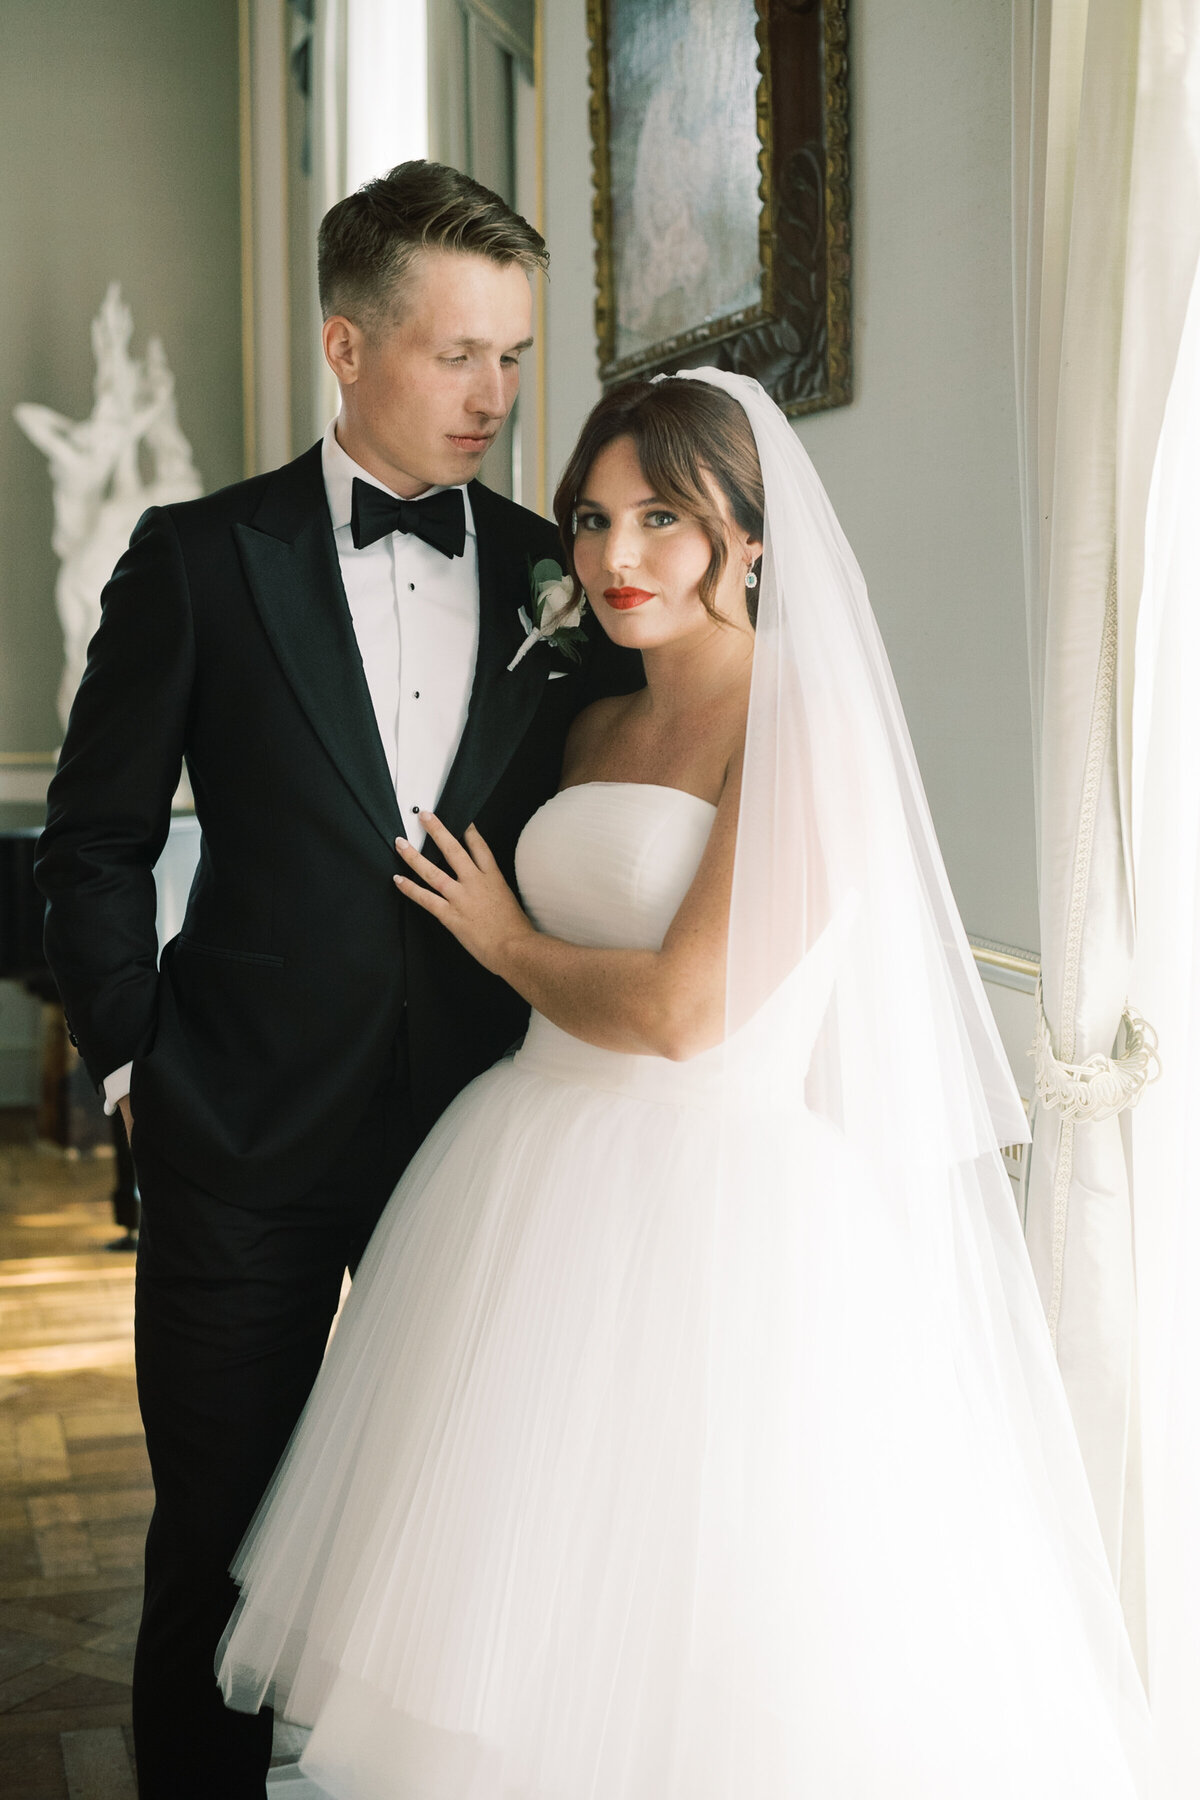 Michelle-Behre-Photography-Wedding-Caitlin-and-Ruslan-Jasna-Polana-Princeton-NJ-Wedding-Photographer-18